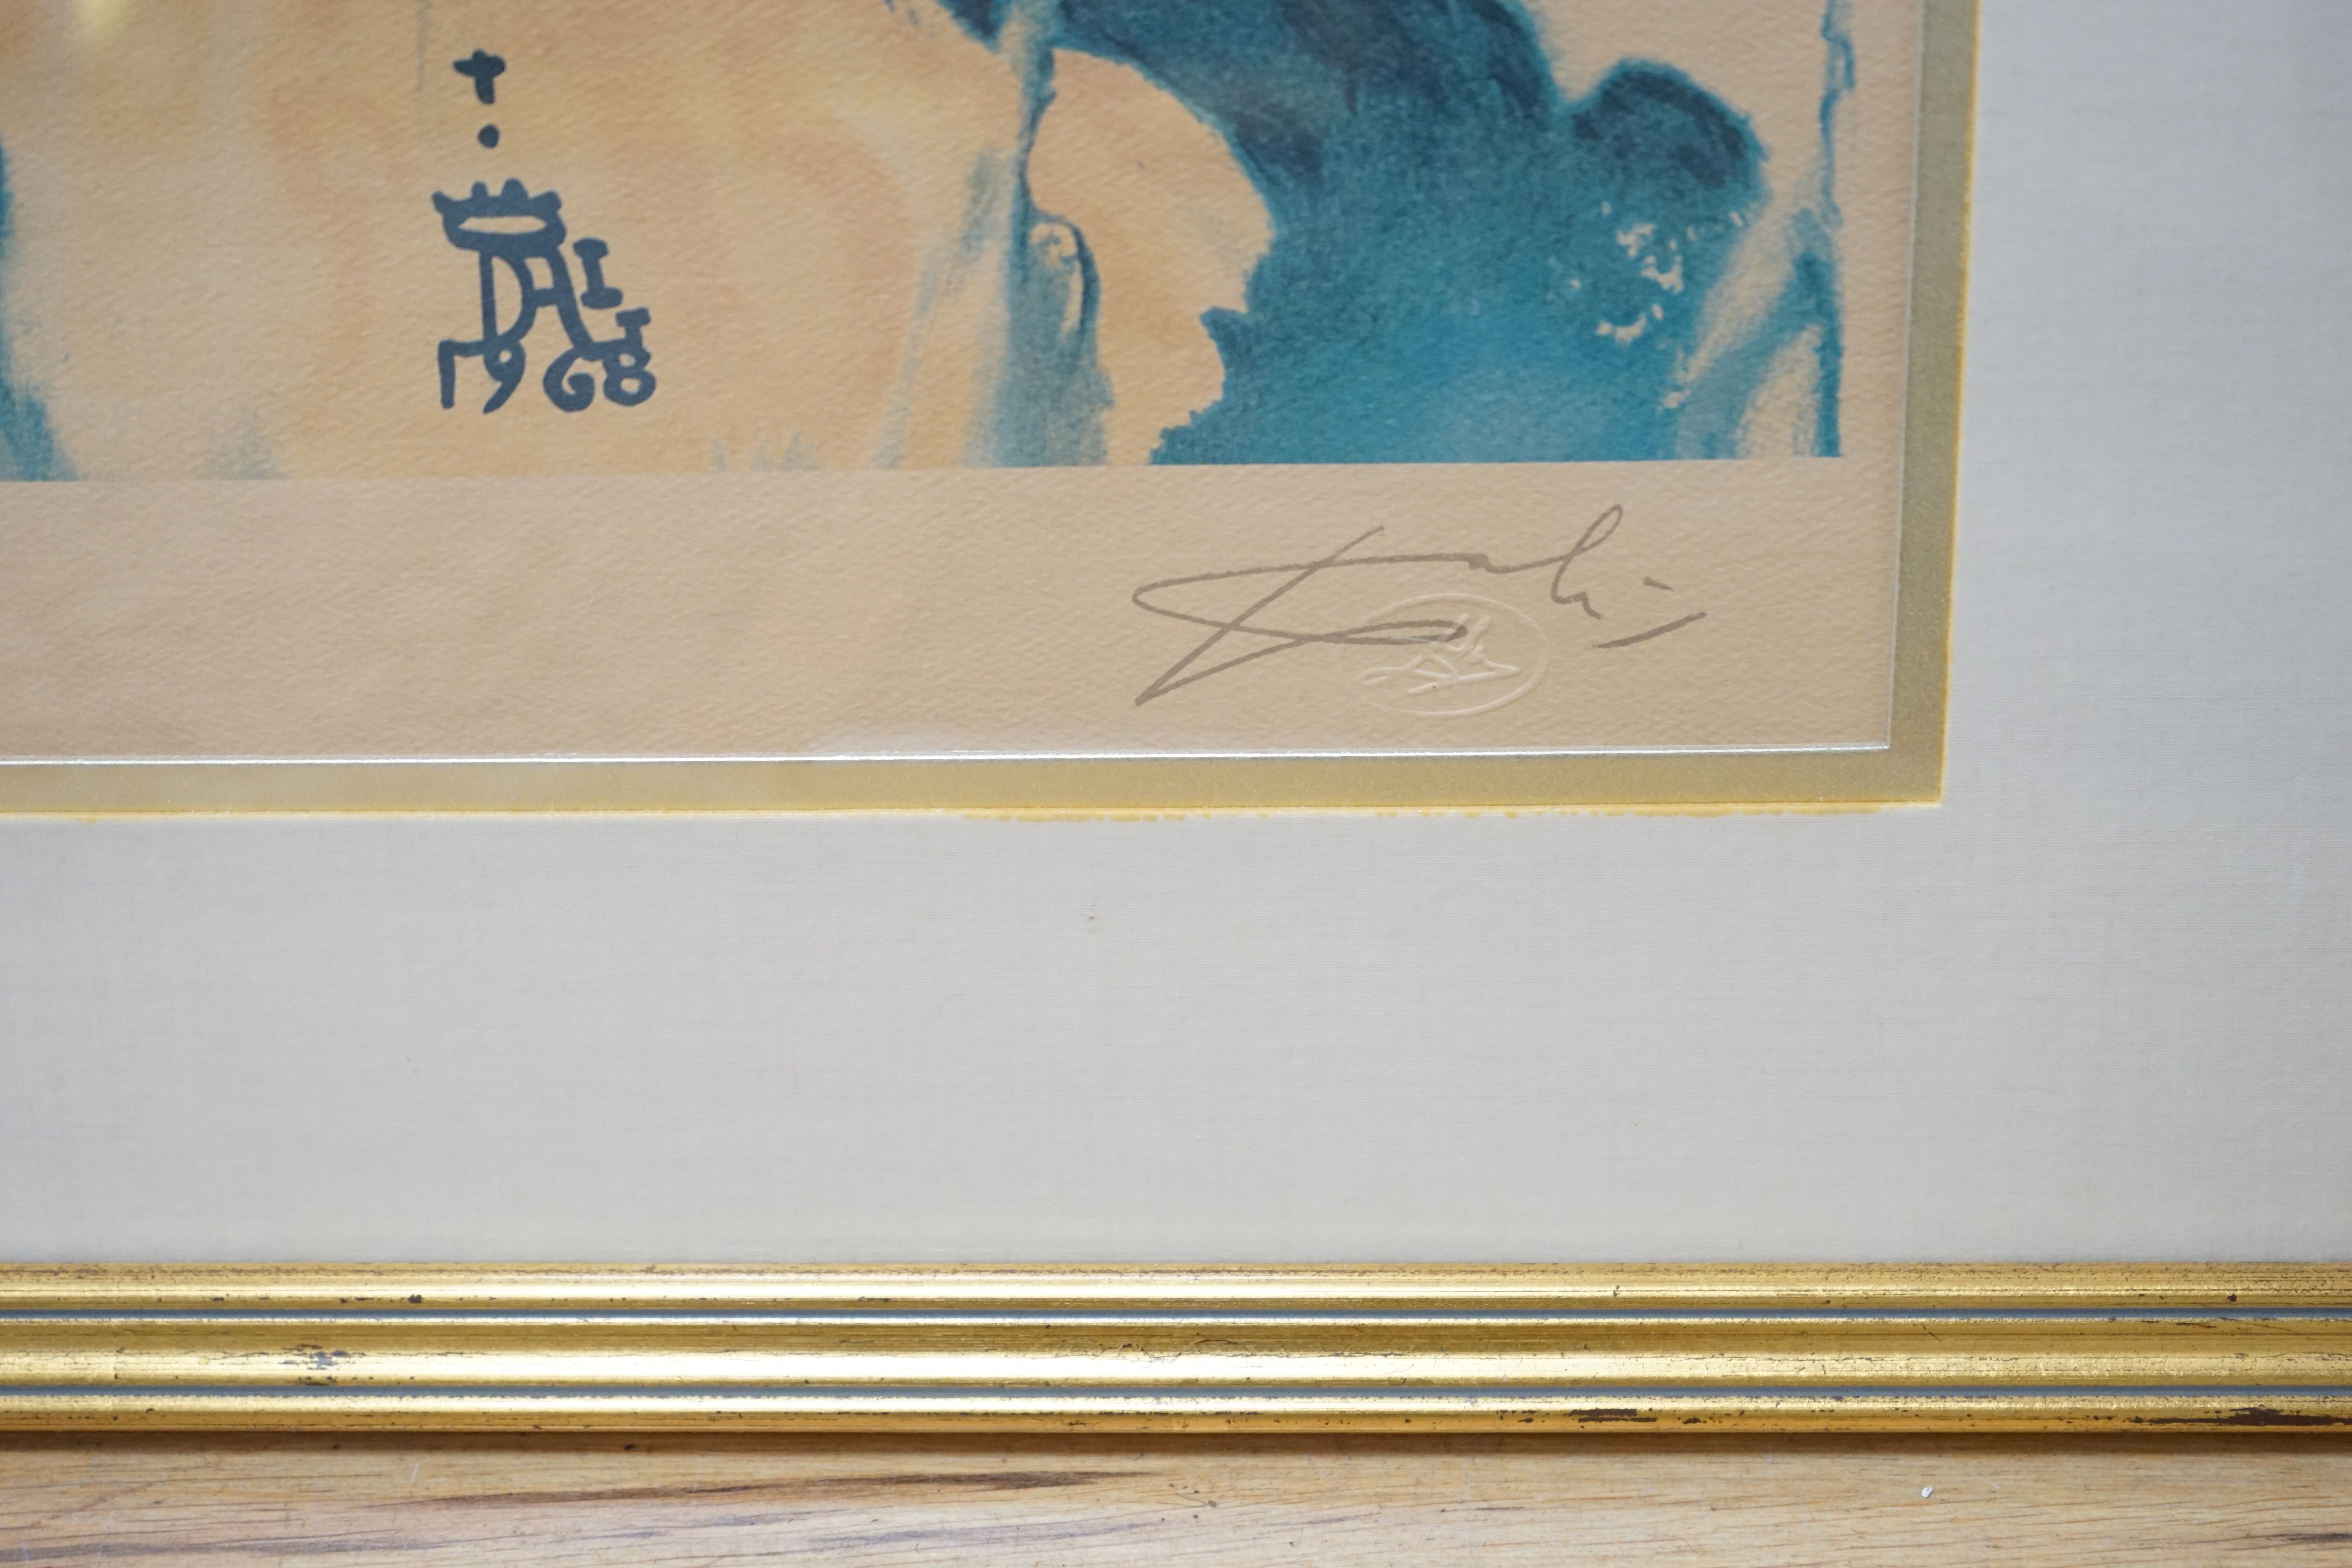 Salvador Dali (Spanish 1904-1989), colour lithograph, Alice in Wonderland, ‘Mad Tea Party’, pencil numbered 191/300, facsimile signature, certificate of authenticity verso 56 x 37cm. Condition - fair